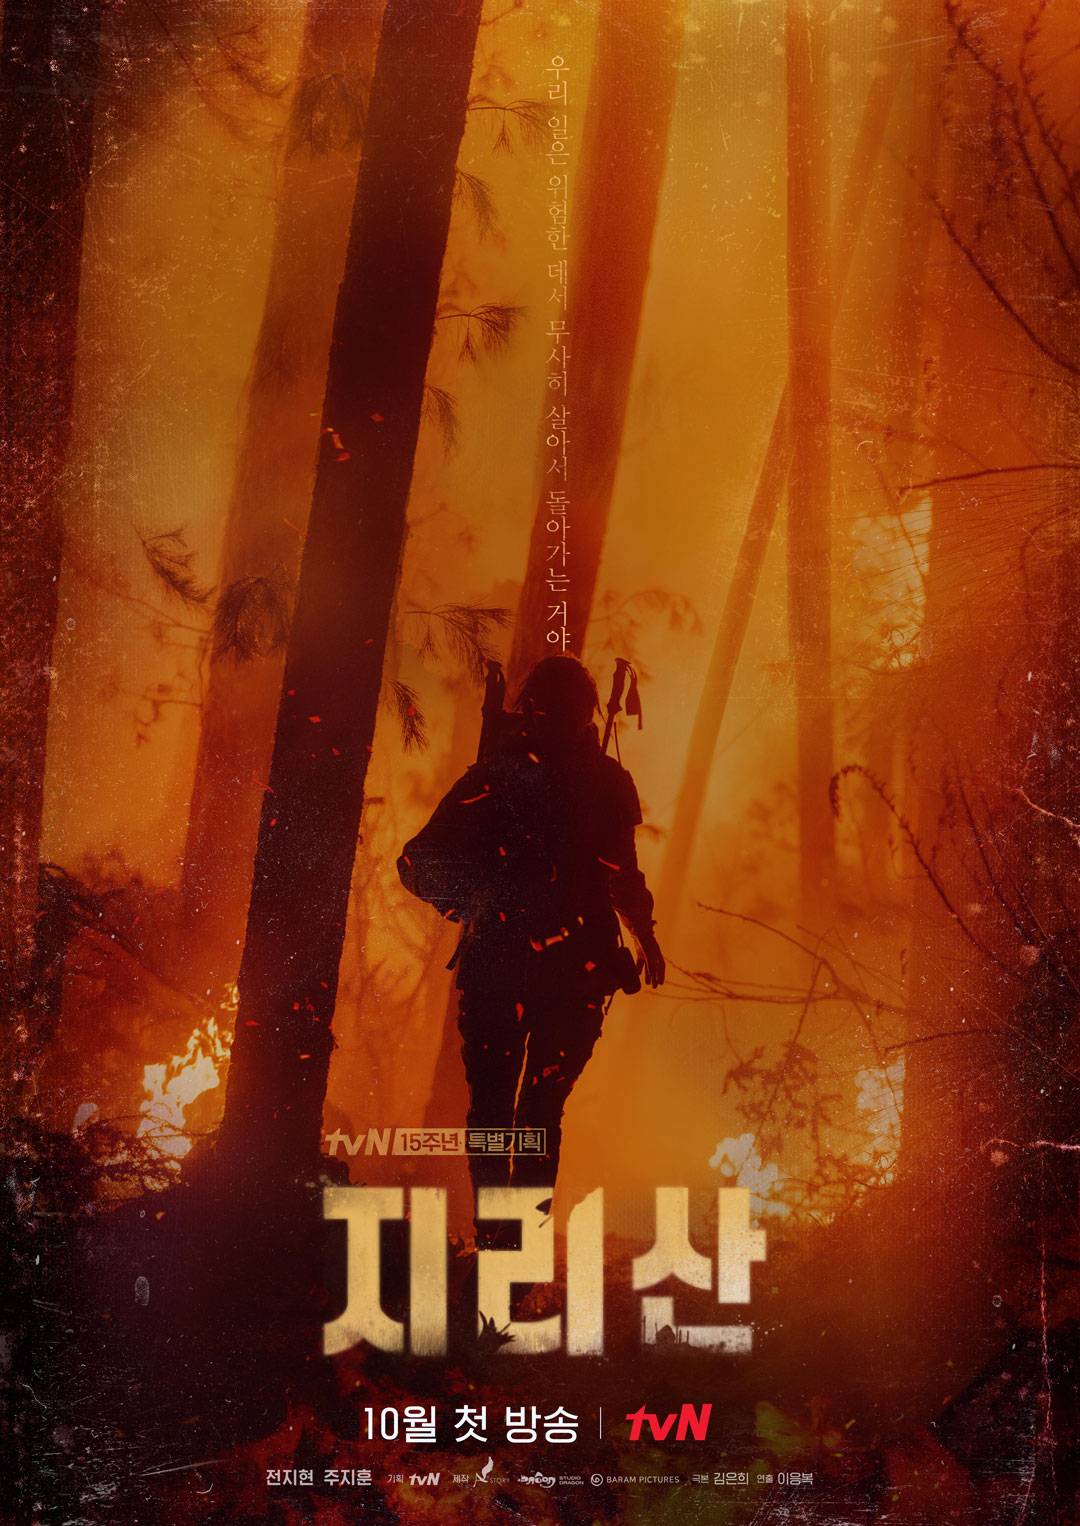 Photo Poster Added For The Upcoming Korean Drama Jirisan Hancinema 4024